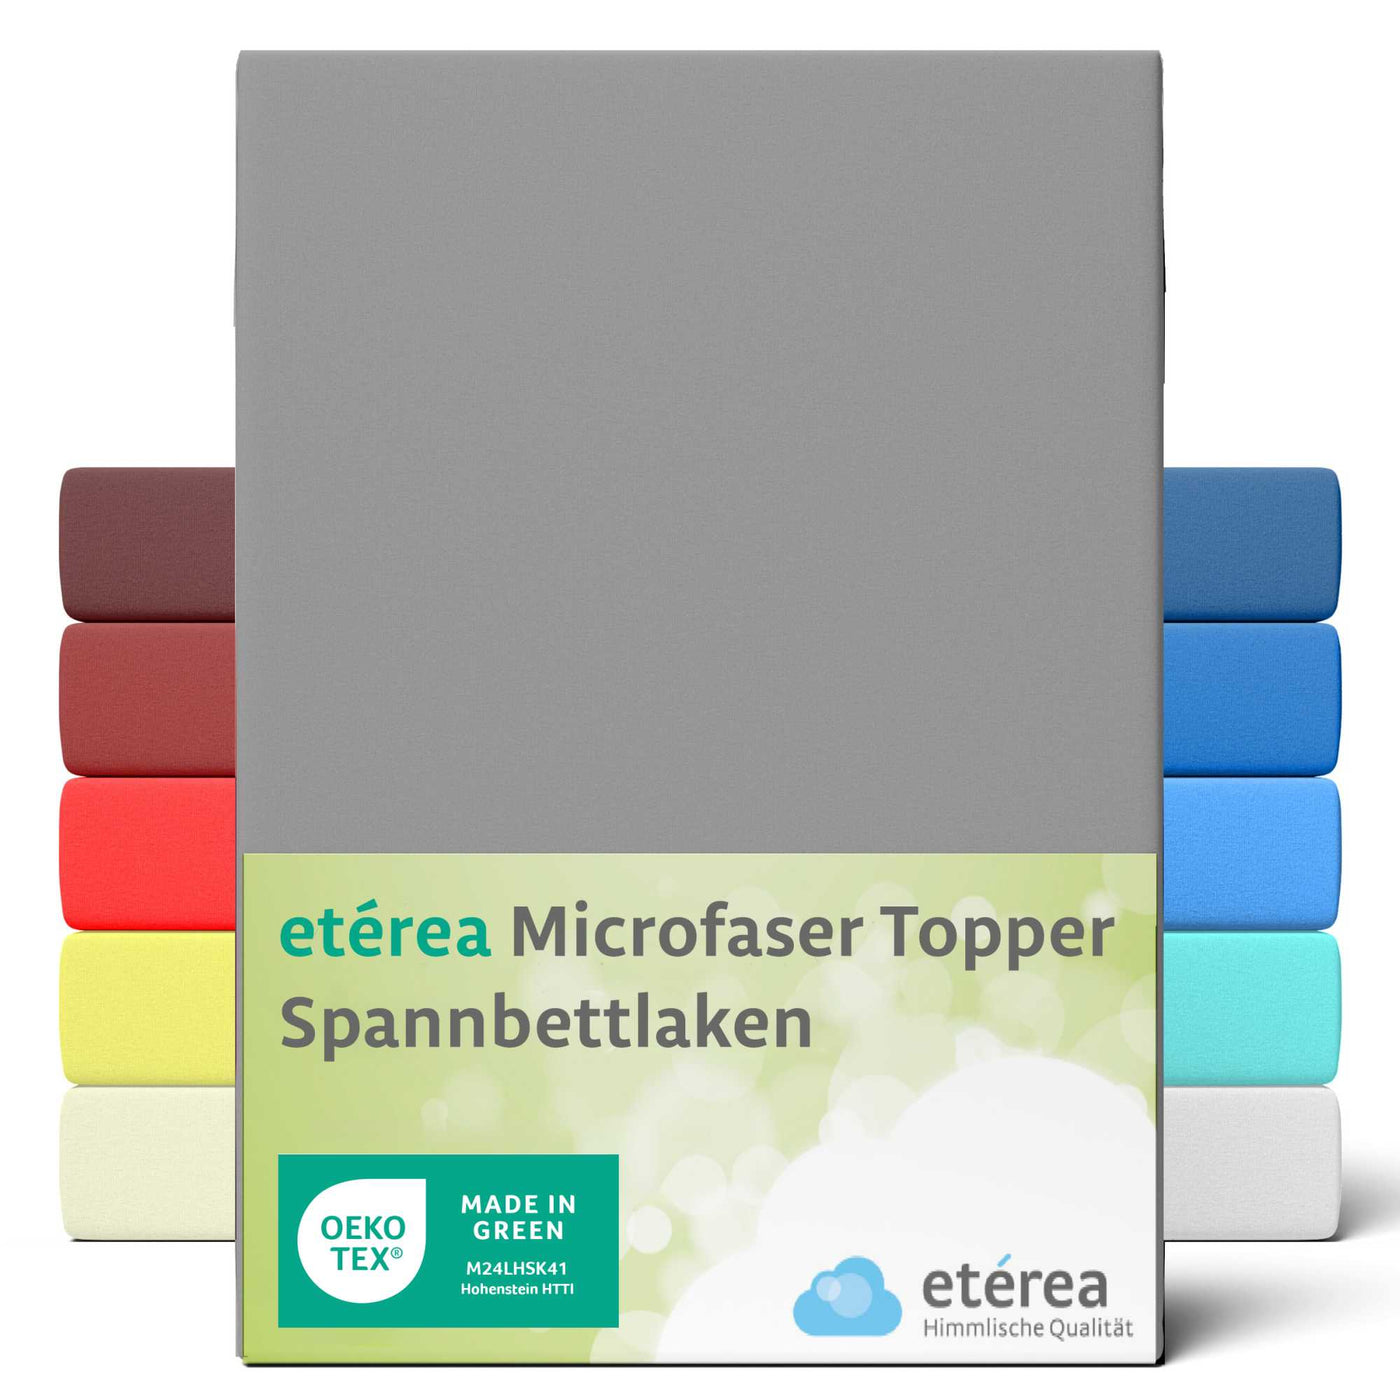 etérea Microfaser Topper Spannbettlaken #farbe_grau